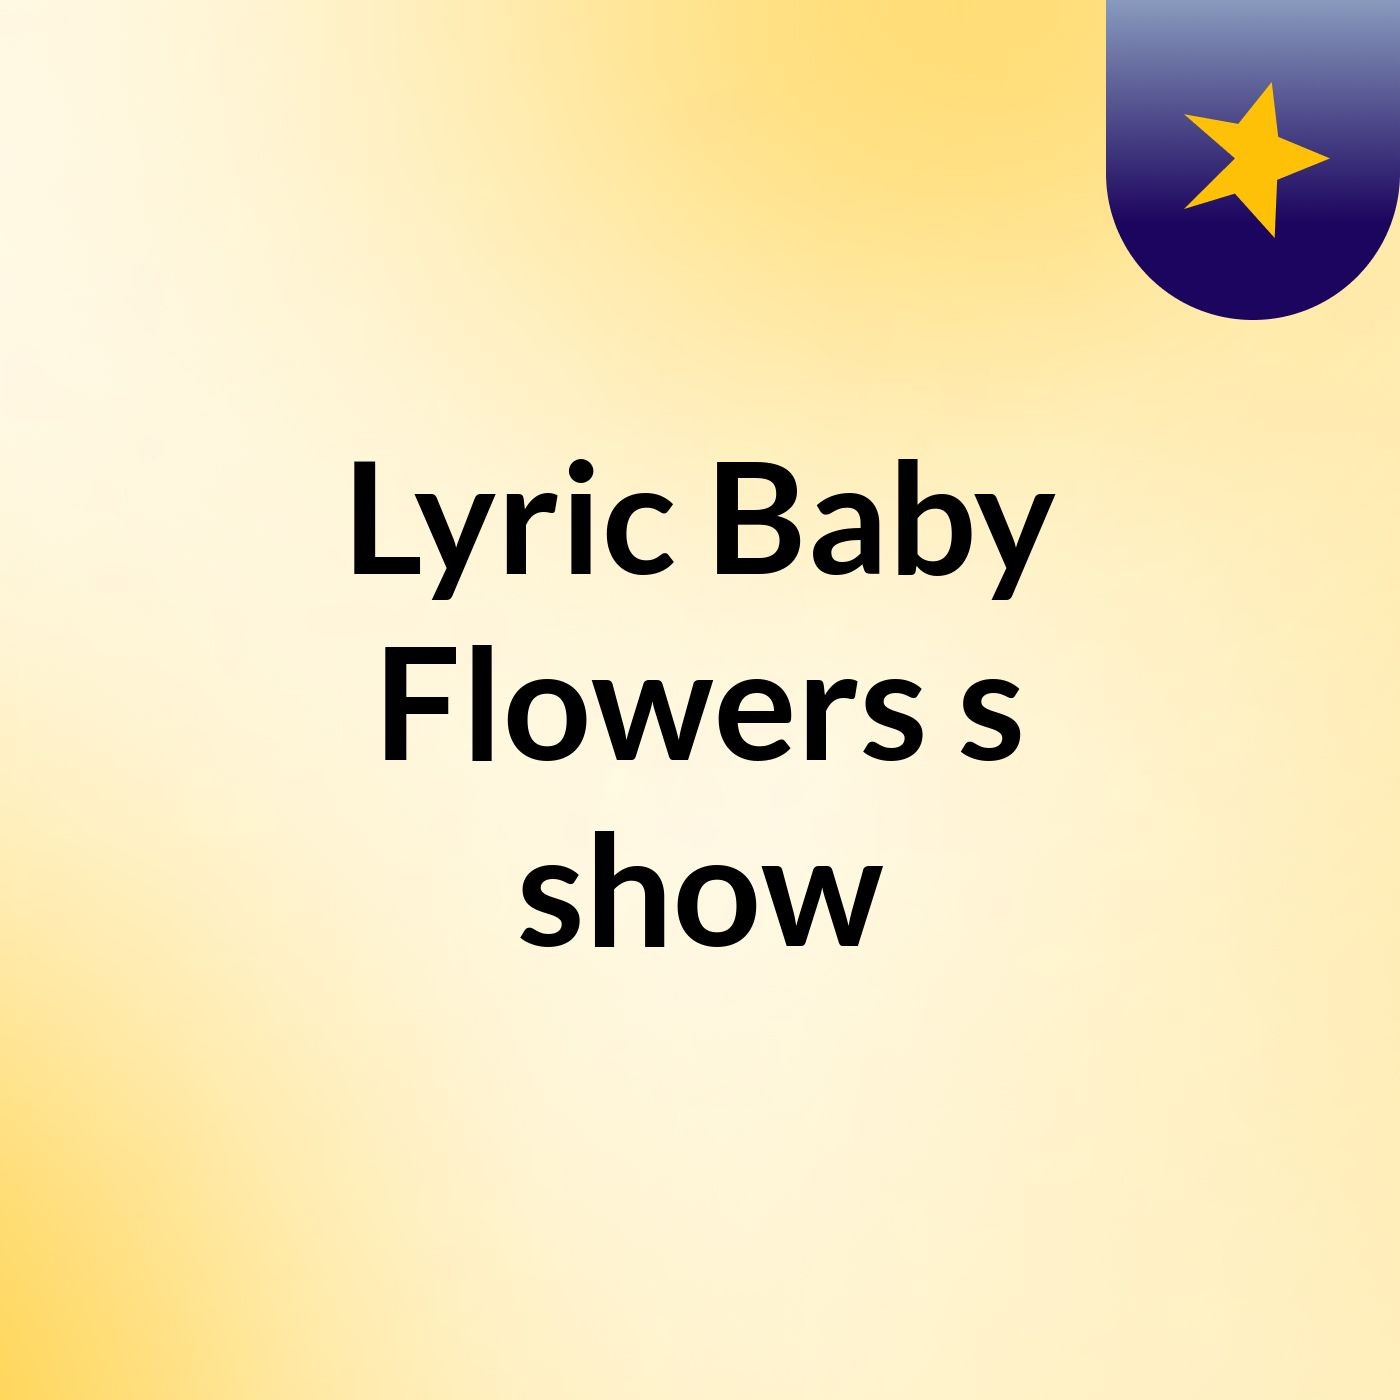 Lyric Baby Flowers's show